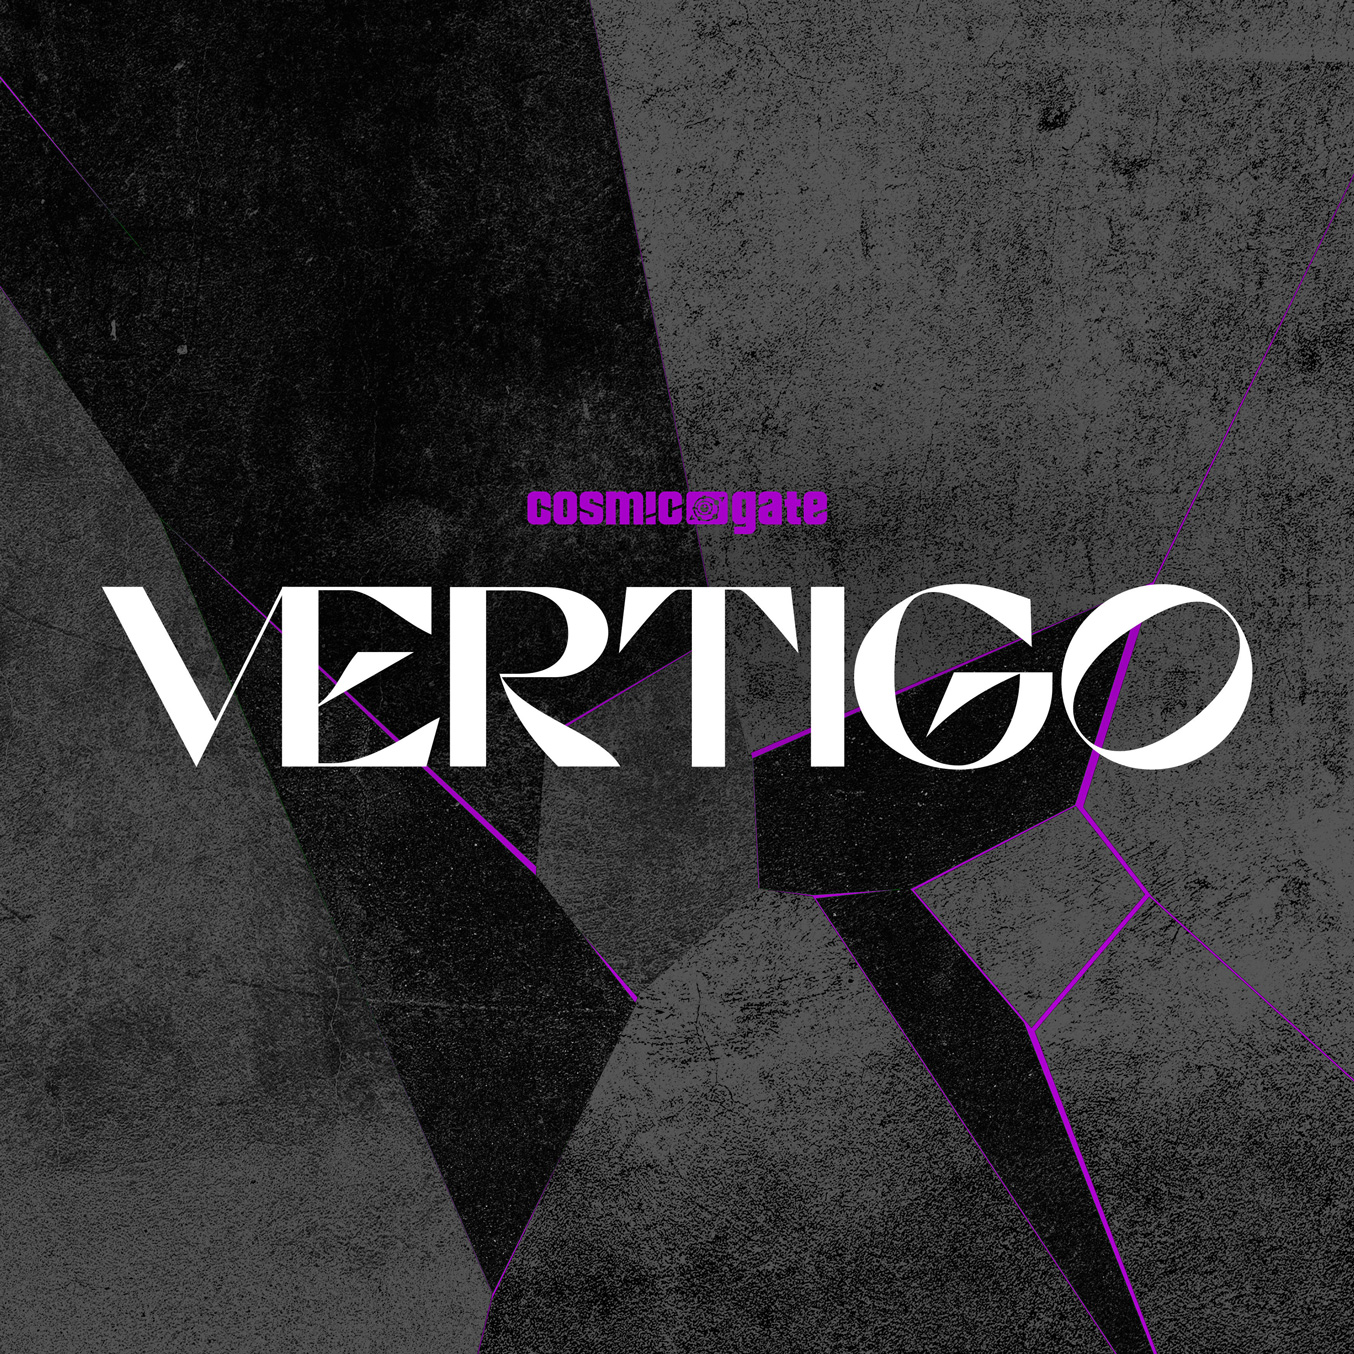 Cosmic Gate presents Vertigo on Black Hole Recordings